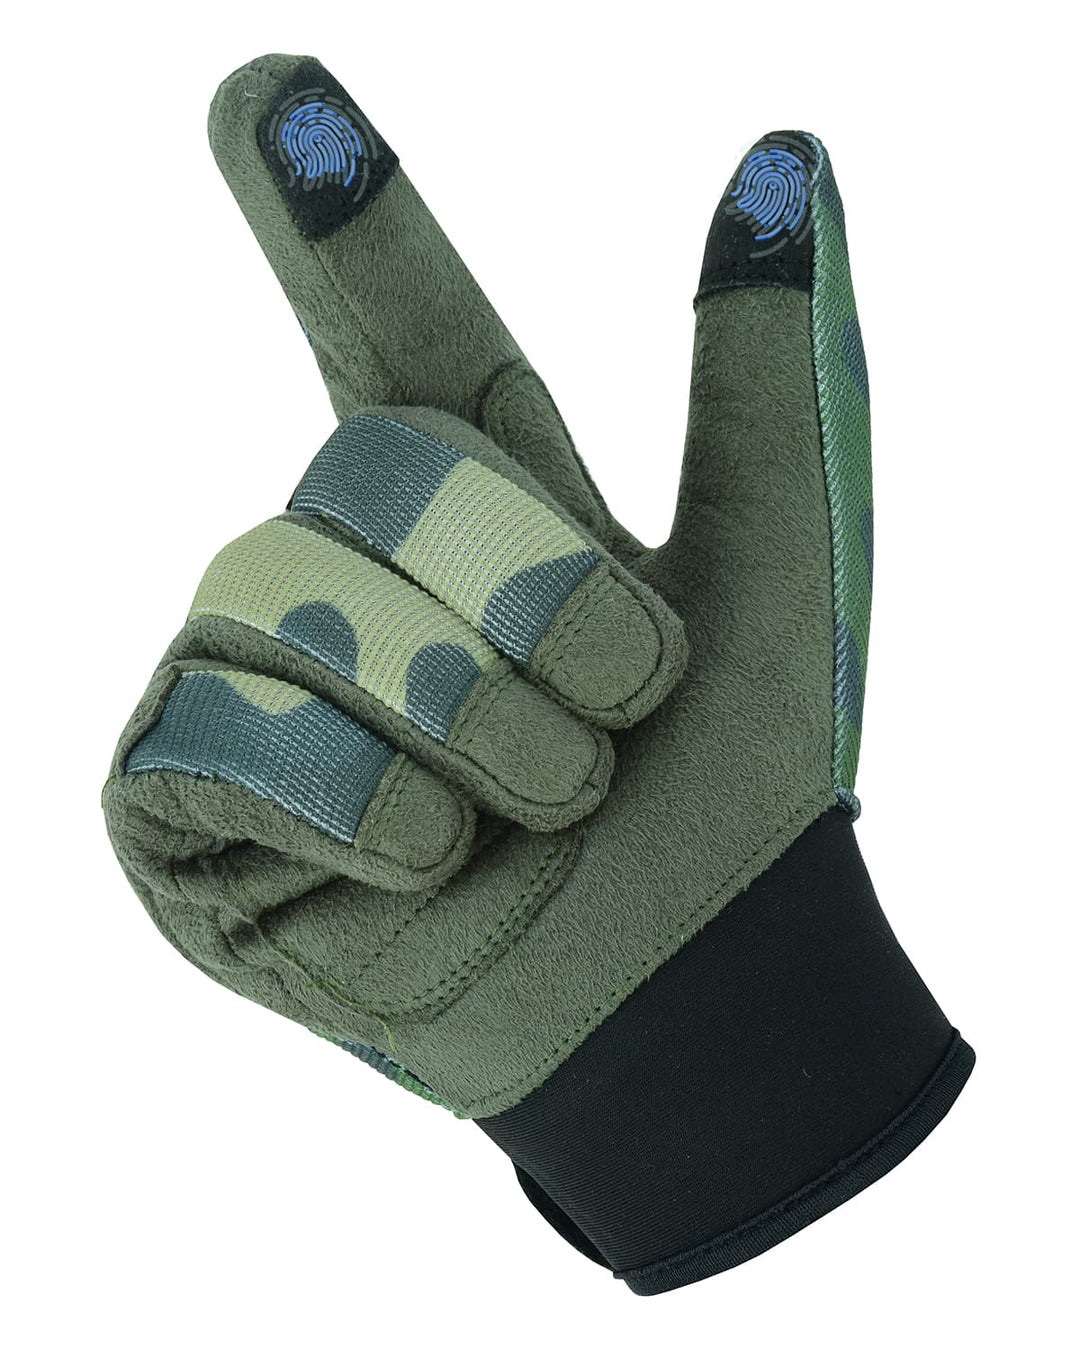 Hard Knuckles Gloves - Camo Style